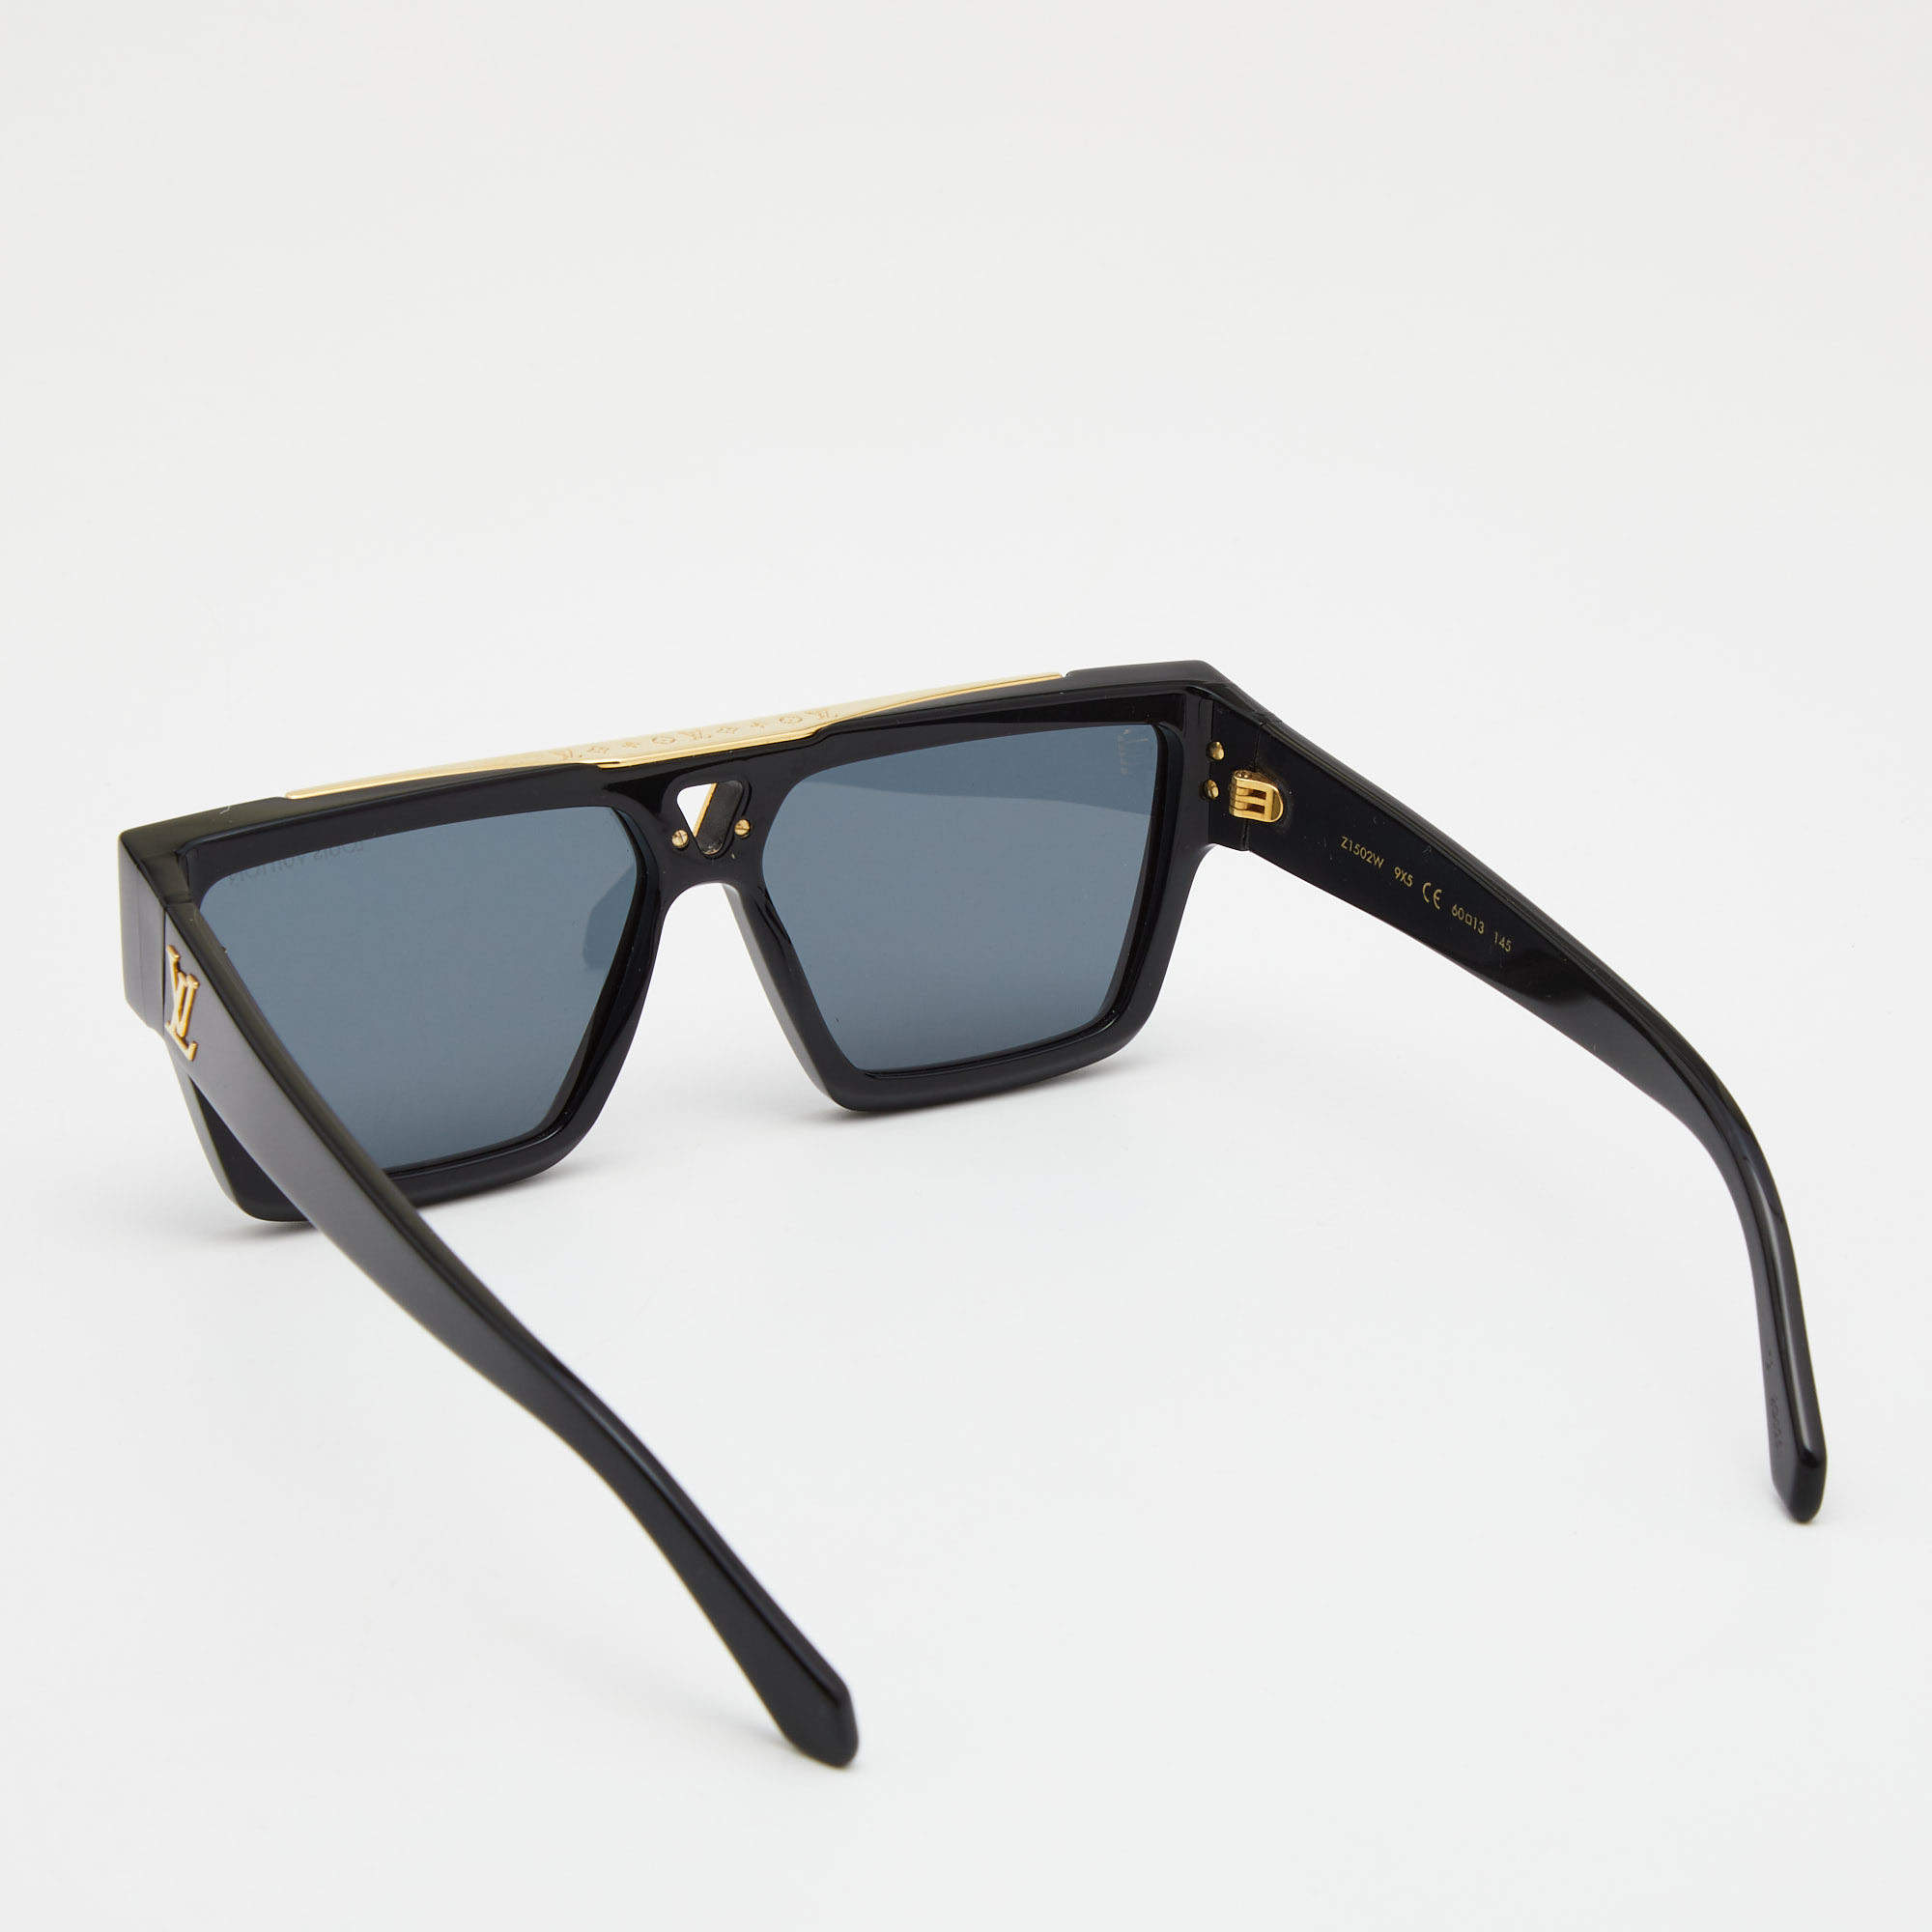 Louis Vuitton Evidence sunglasses  Louis vuitton glasses, Louis vuitton  evidence sunglasses, Sunglasses branding